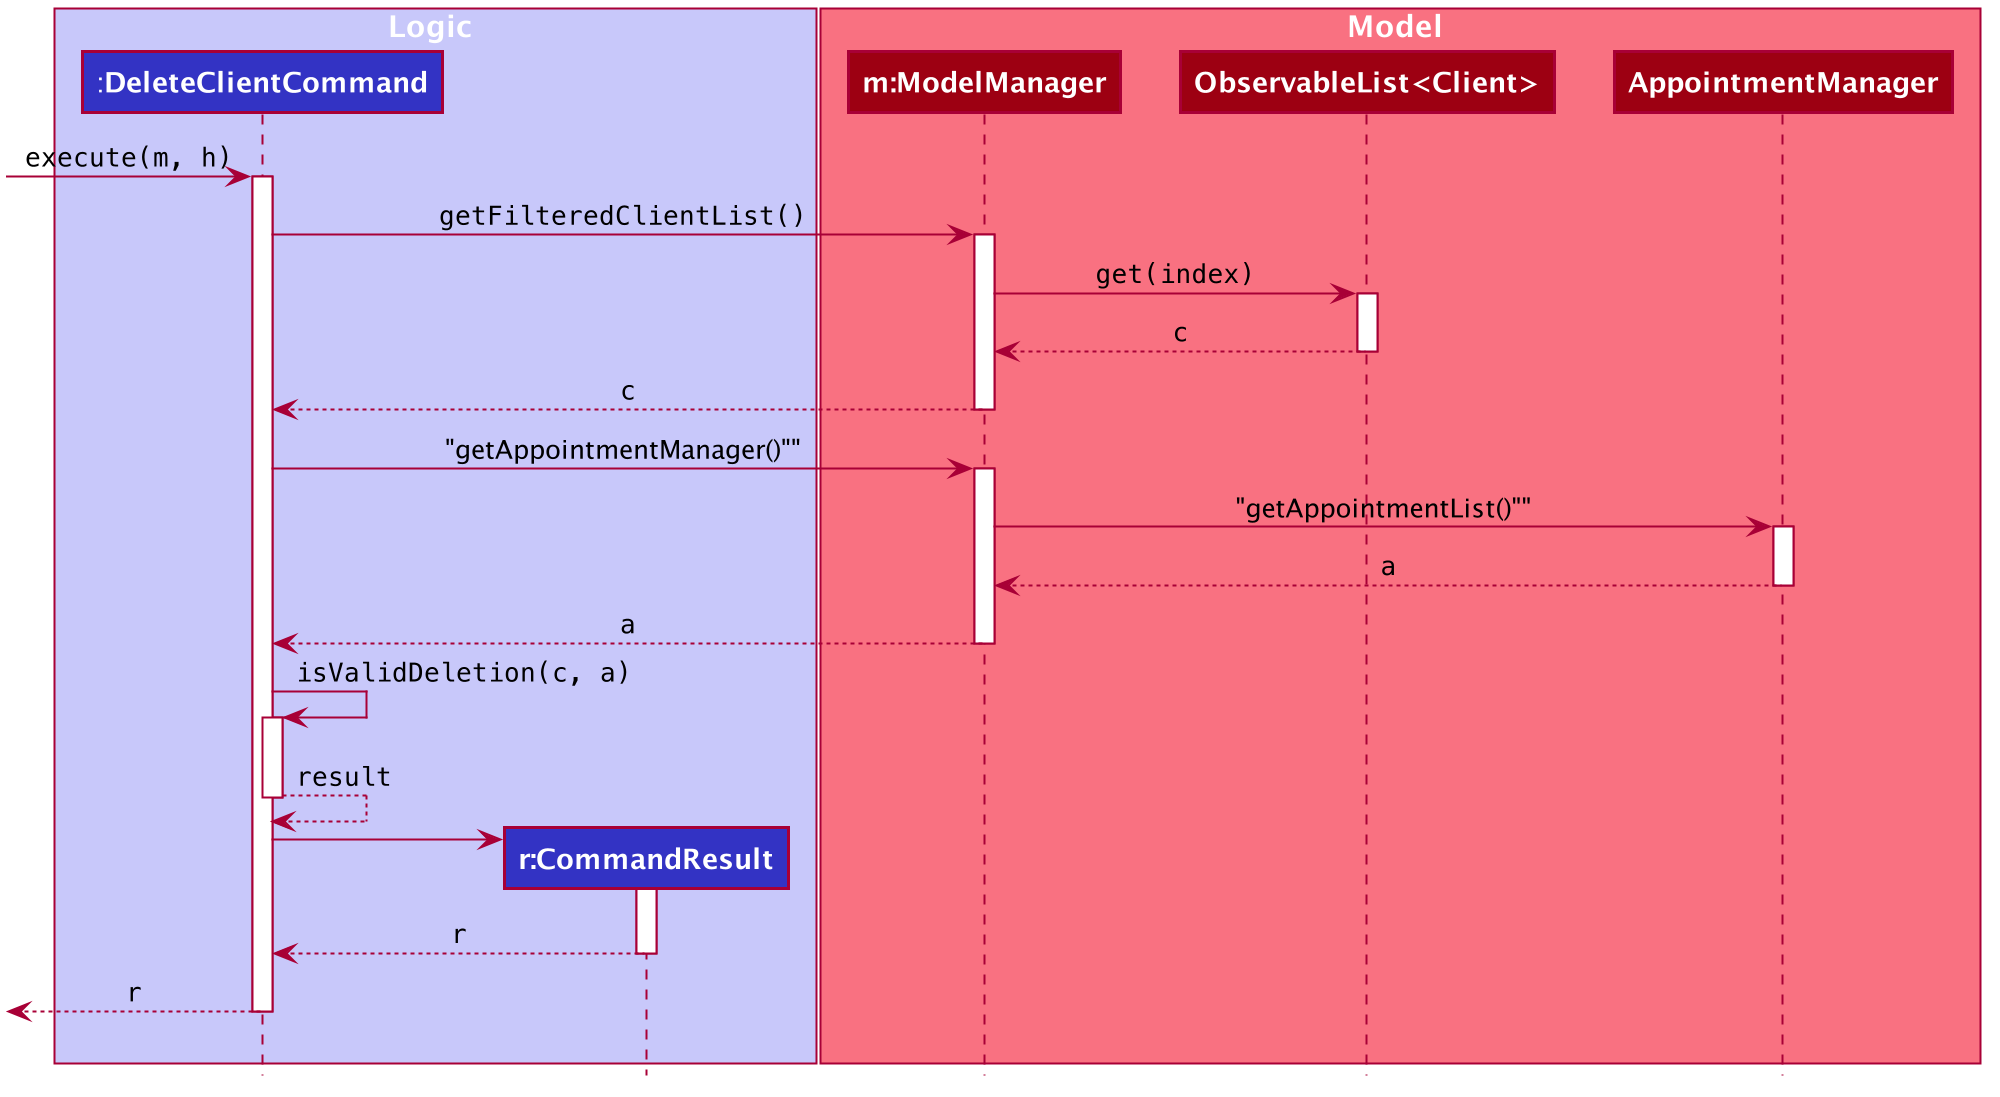 Sequence diagram for deletecli command